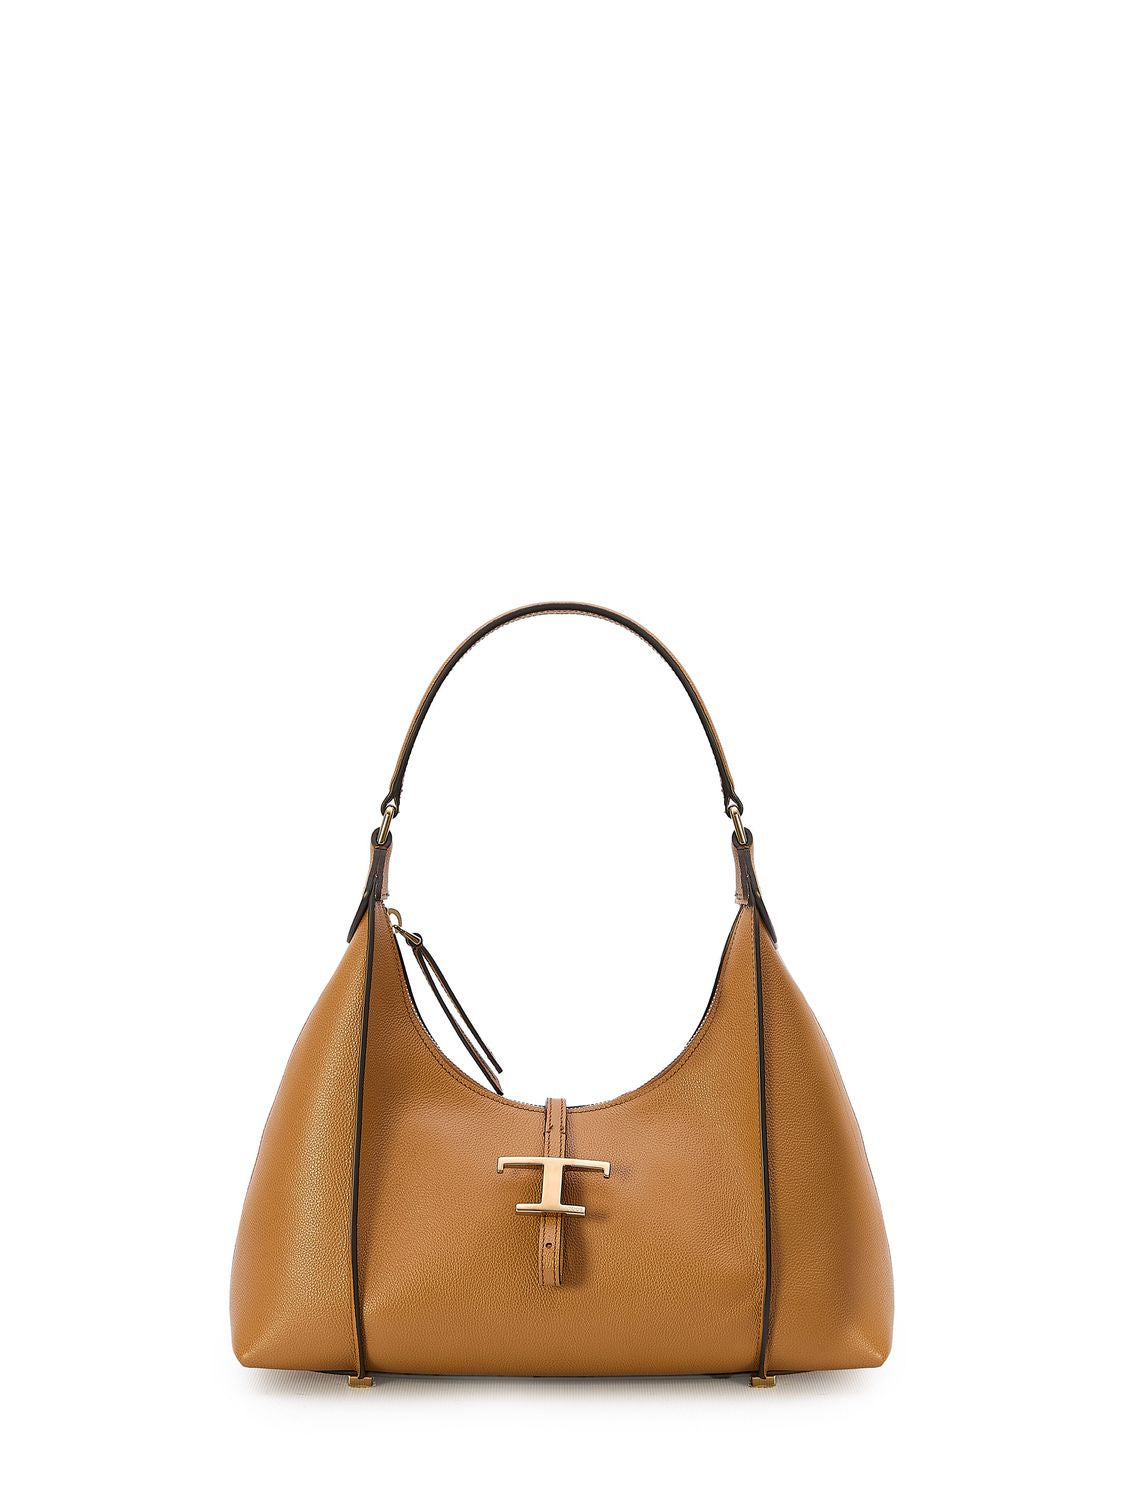 TOD'S Timeless Tan Calfskin Hobo Handbag with T-Shaped Metal Charm, Small - Women’s Shoulder Bag